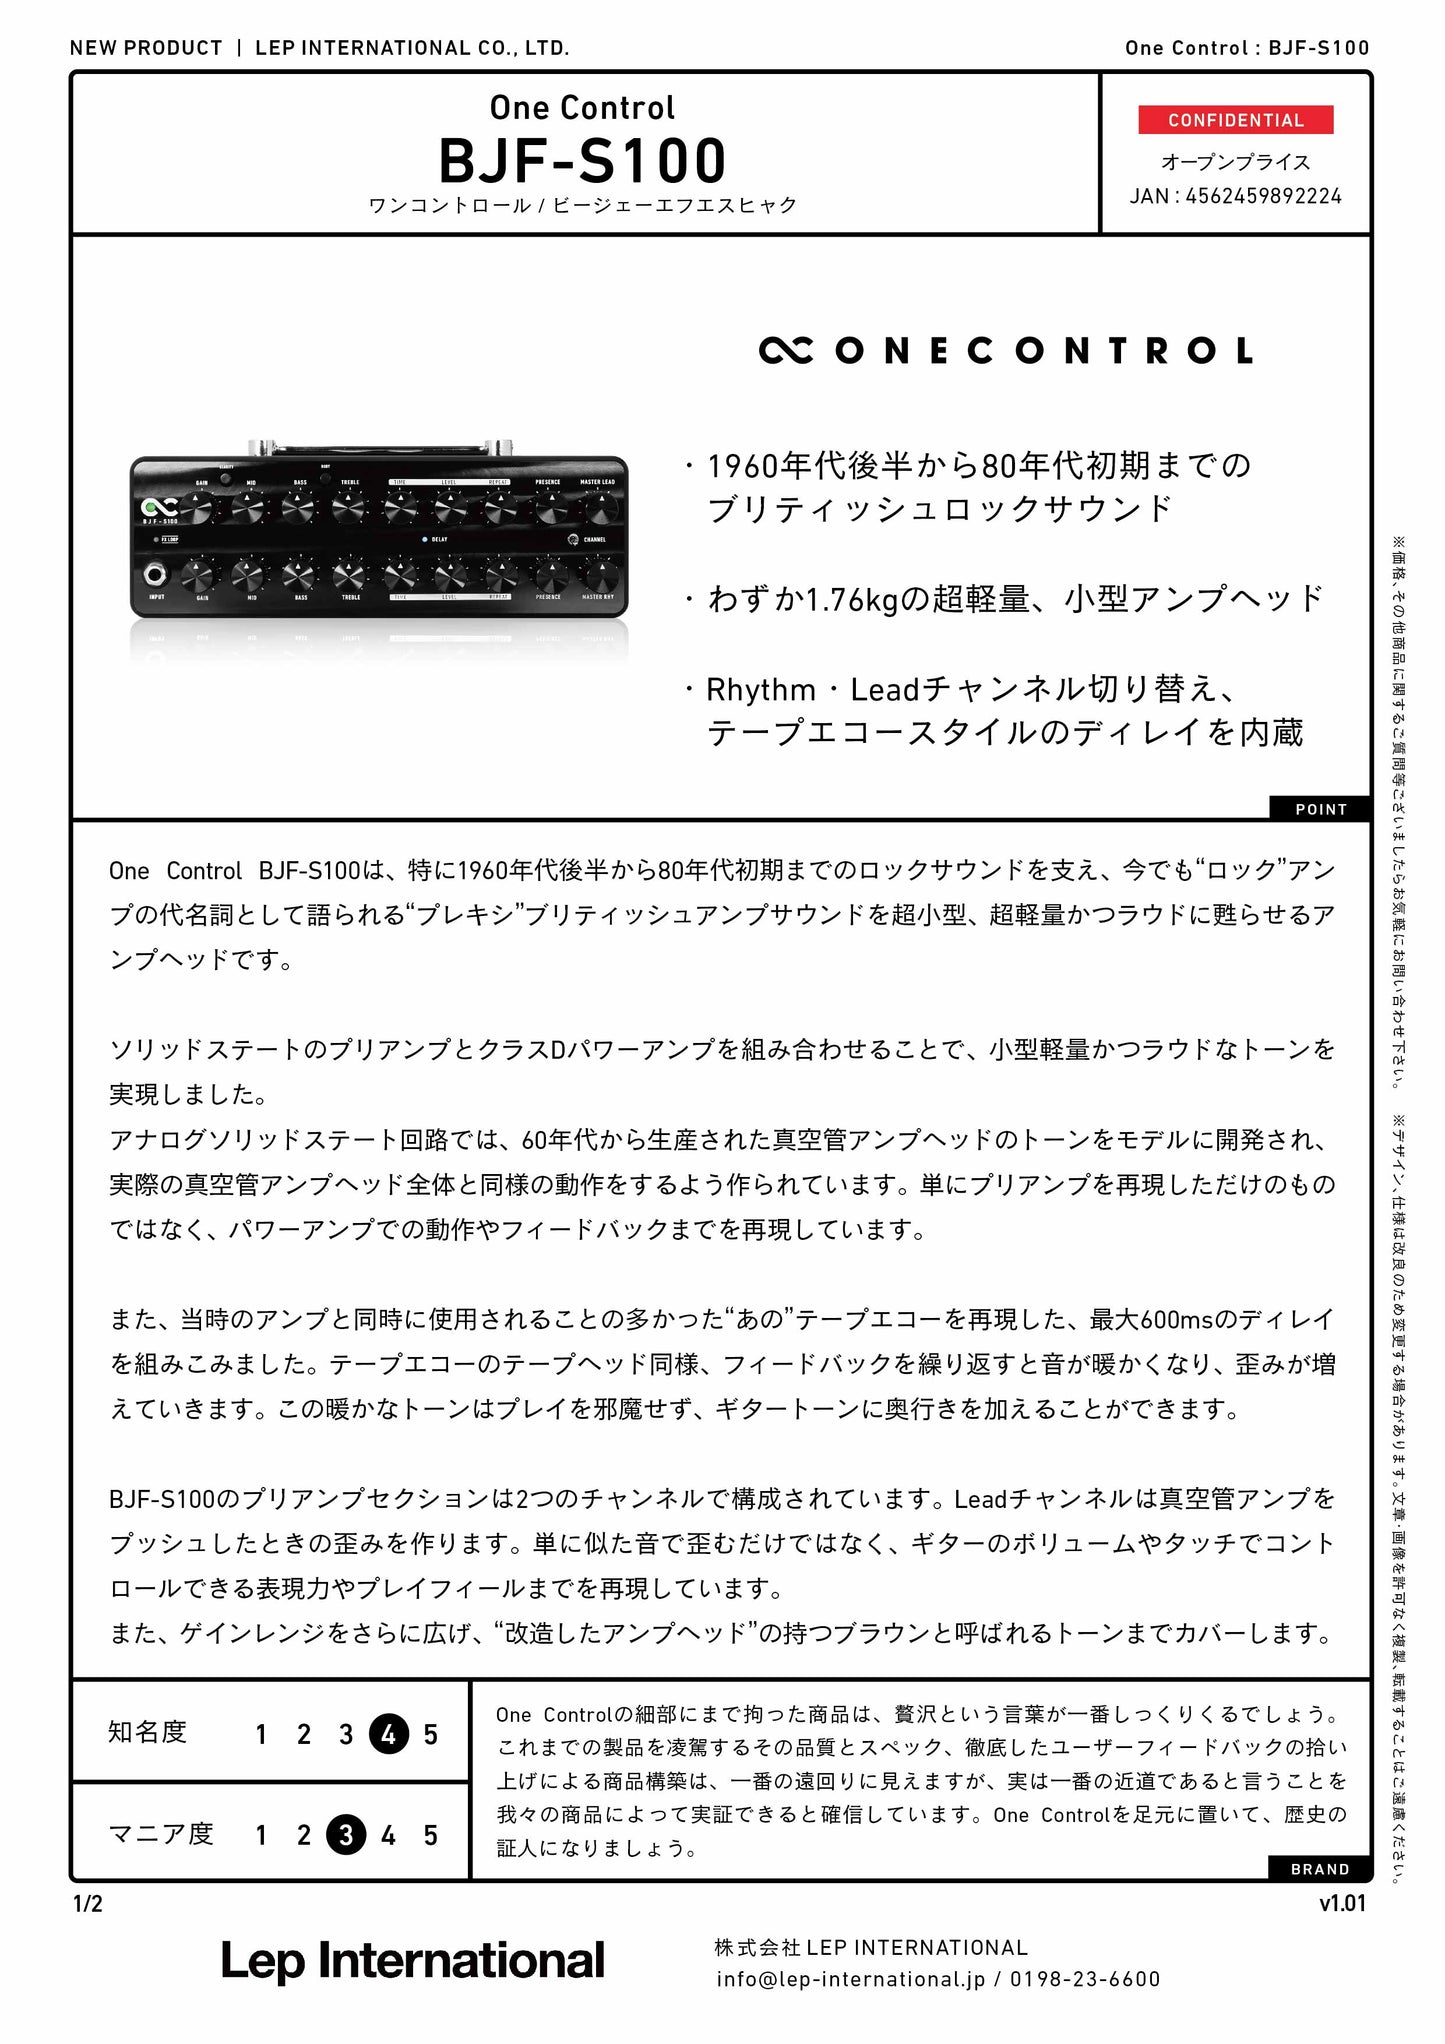 One Control / BJF-S100